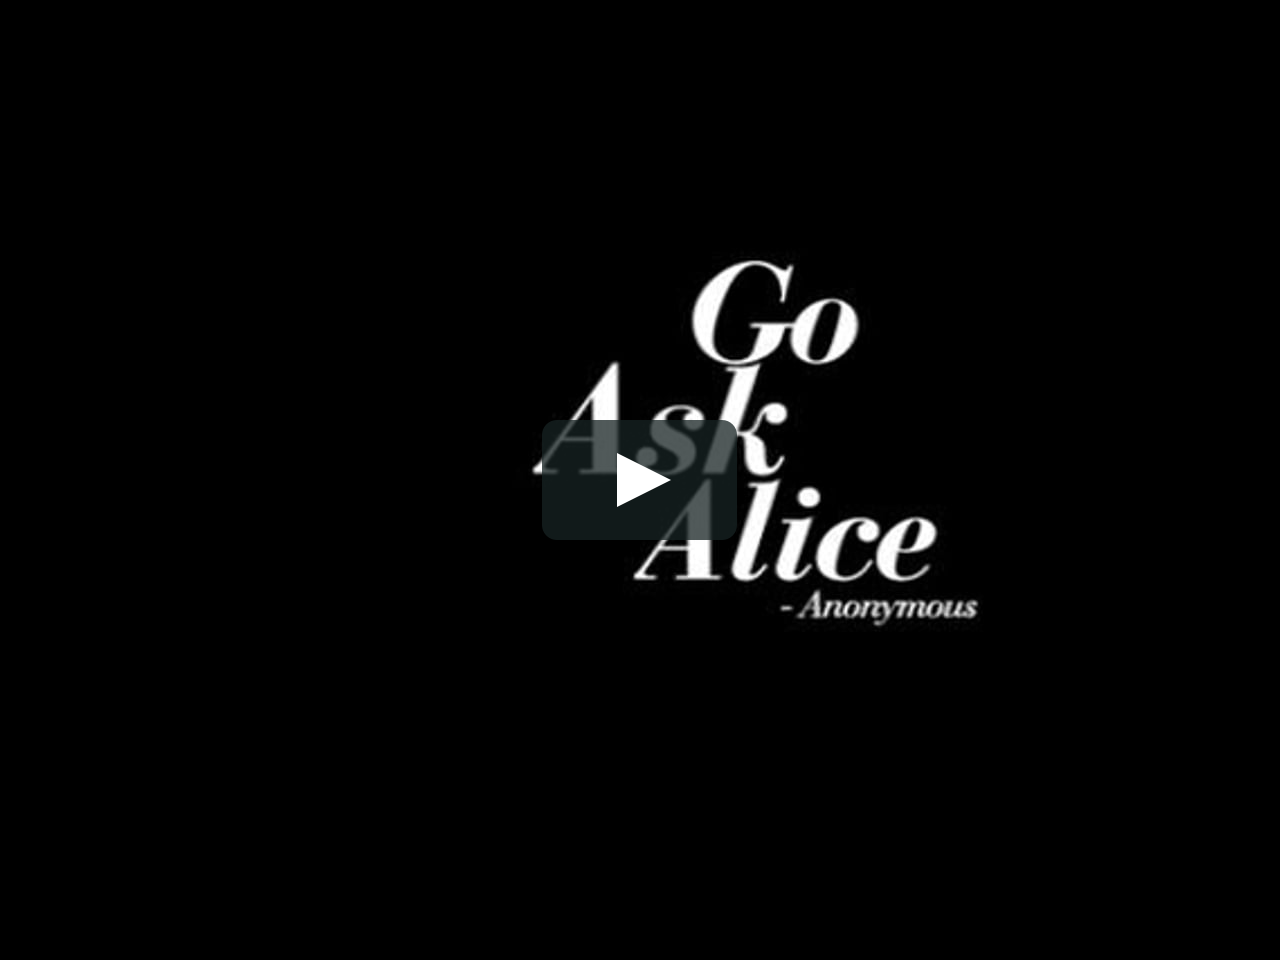 go ask alice movie trailer